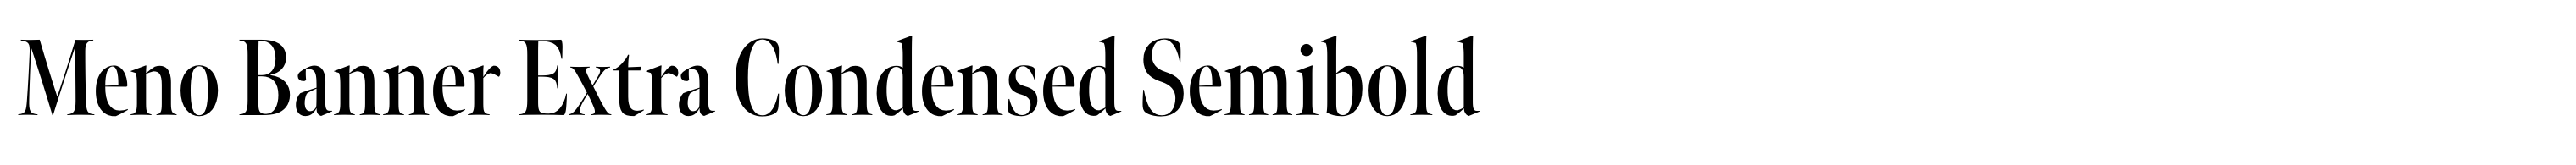 Meno Banner Extra Condensed Semibold